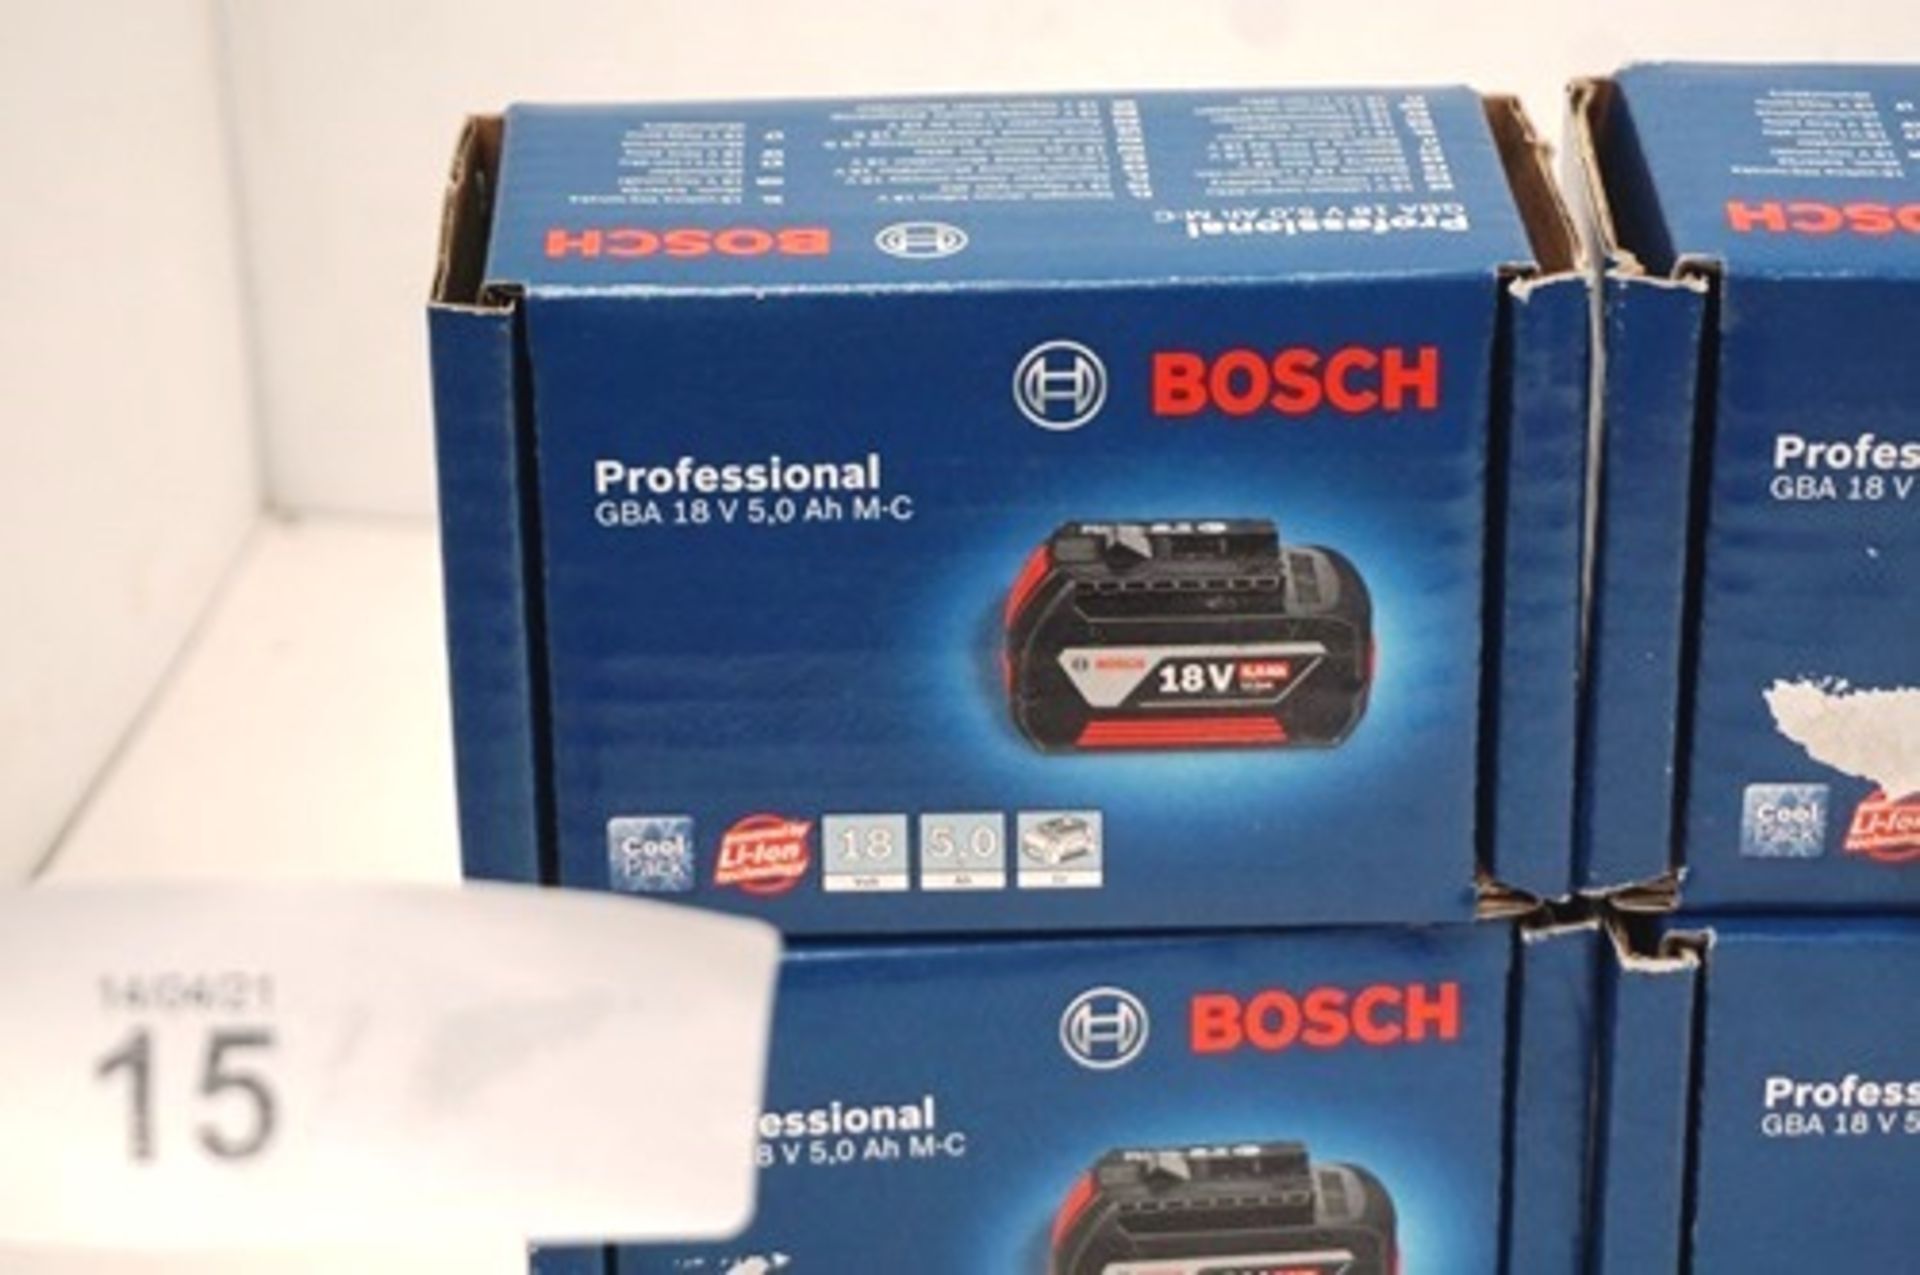 4 x Bosch GBA 18V 5.0Ah M-C batteries, model 1600A002U5, RRP £40.00 each (TC3) - Image 2 of 2